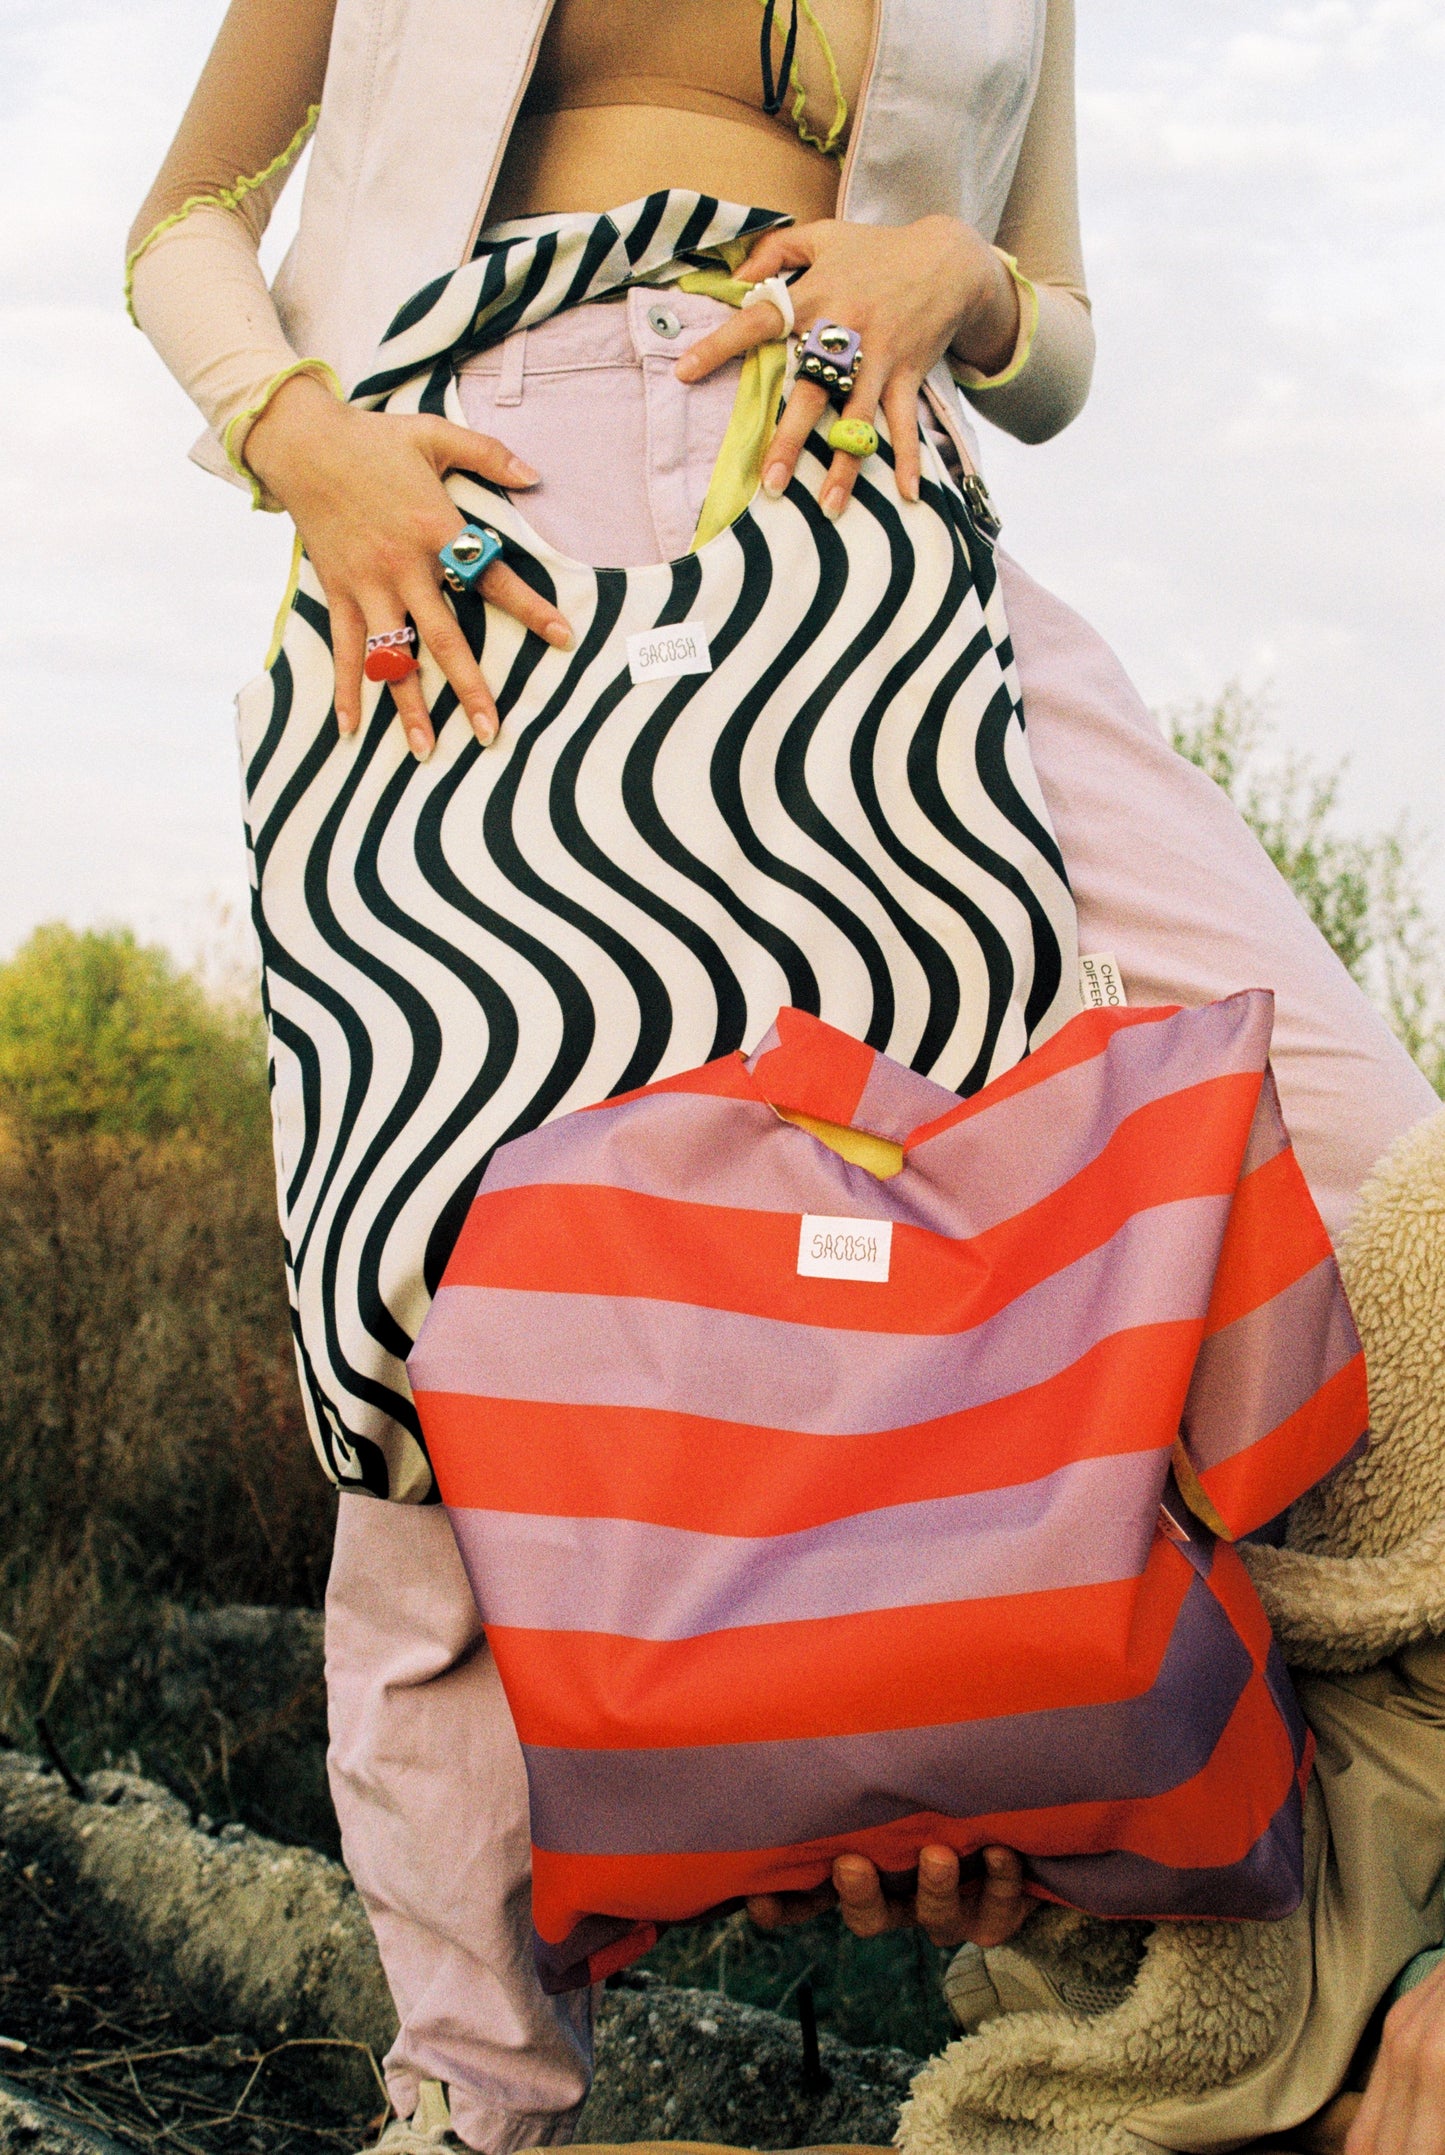 Bag of Berrie Smoothie 2.0